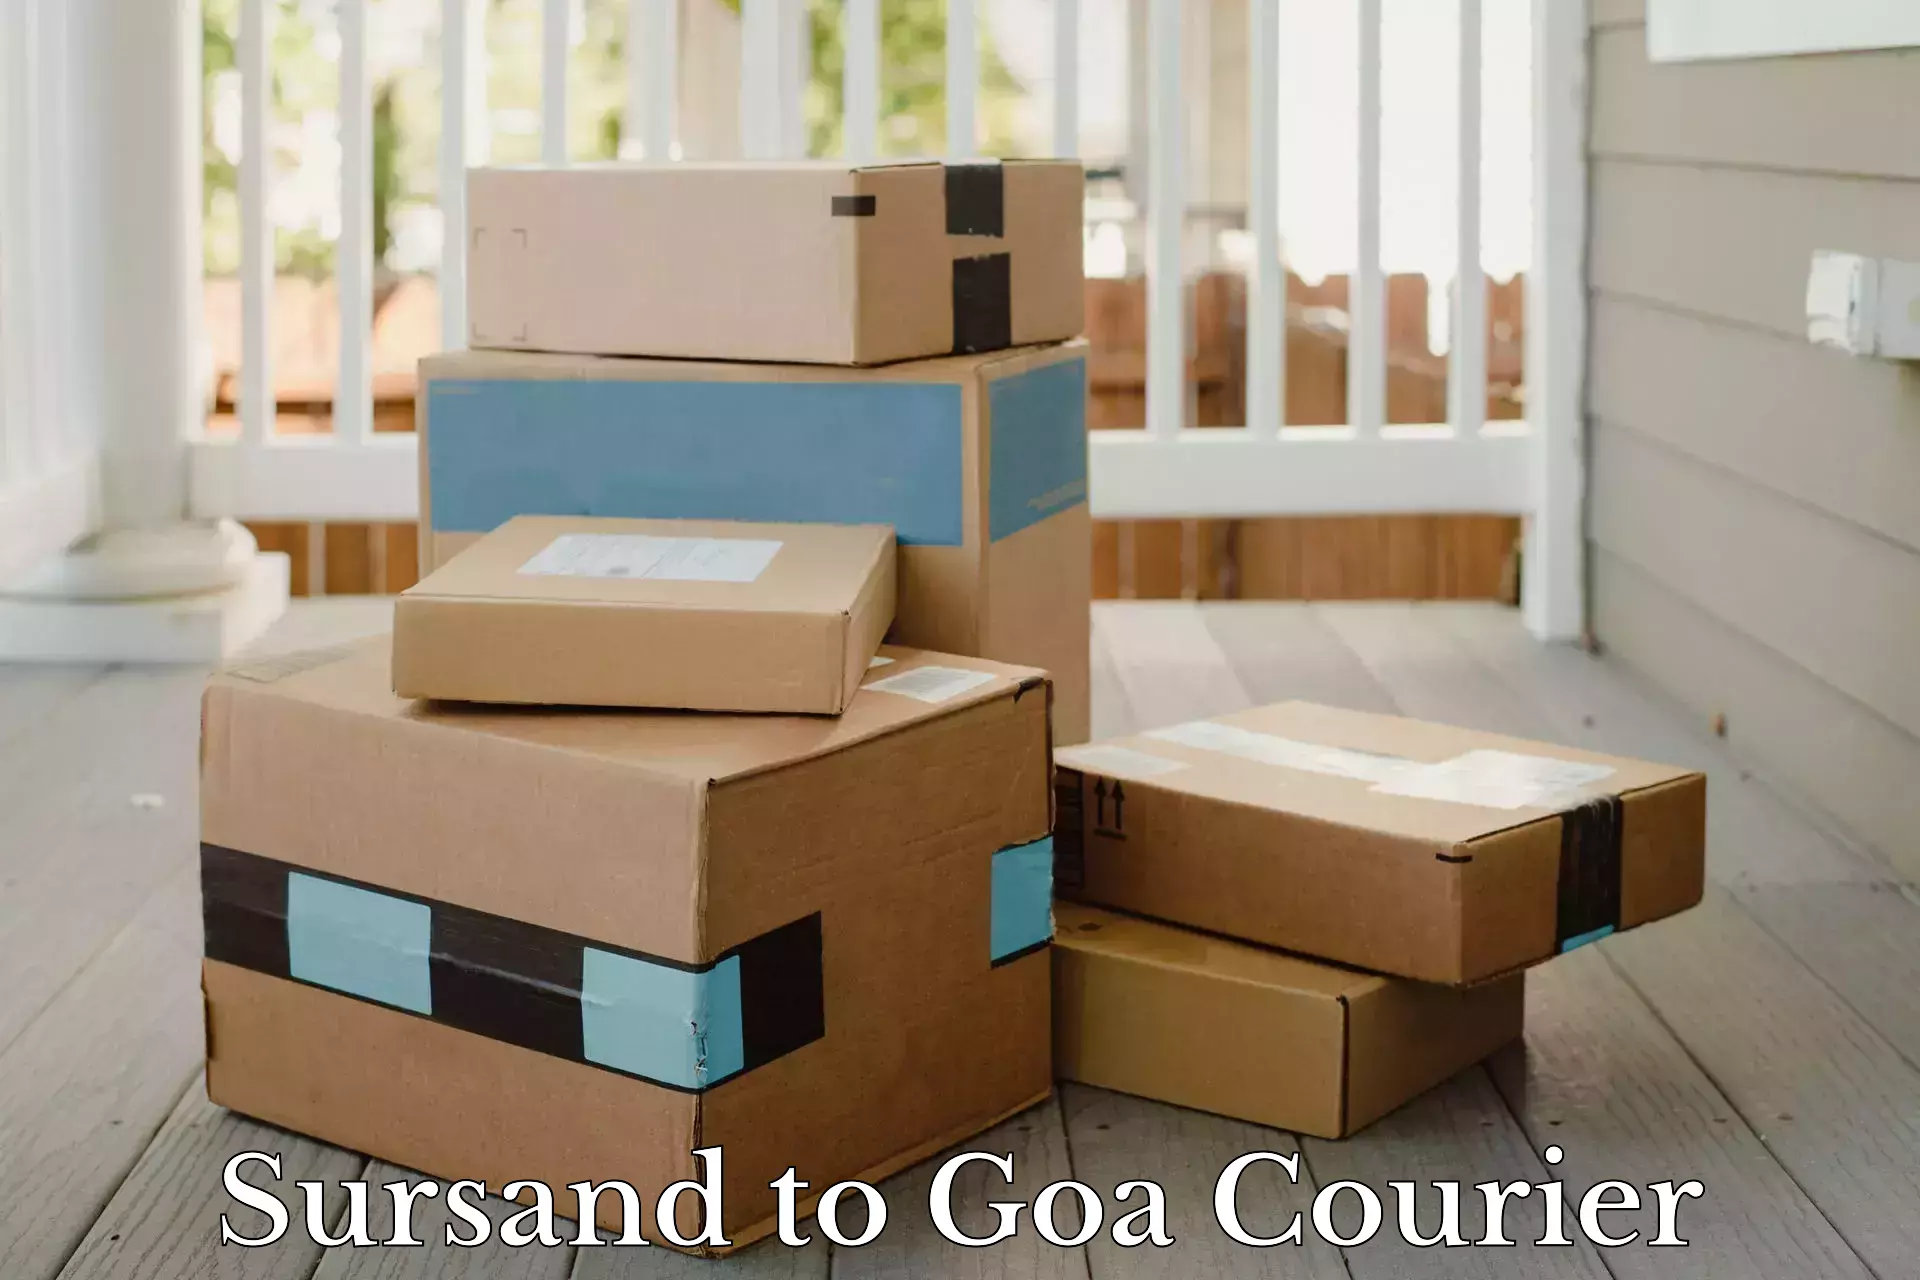 Digital courier platforms in Sursand to Goa